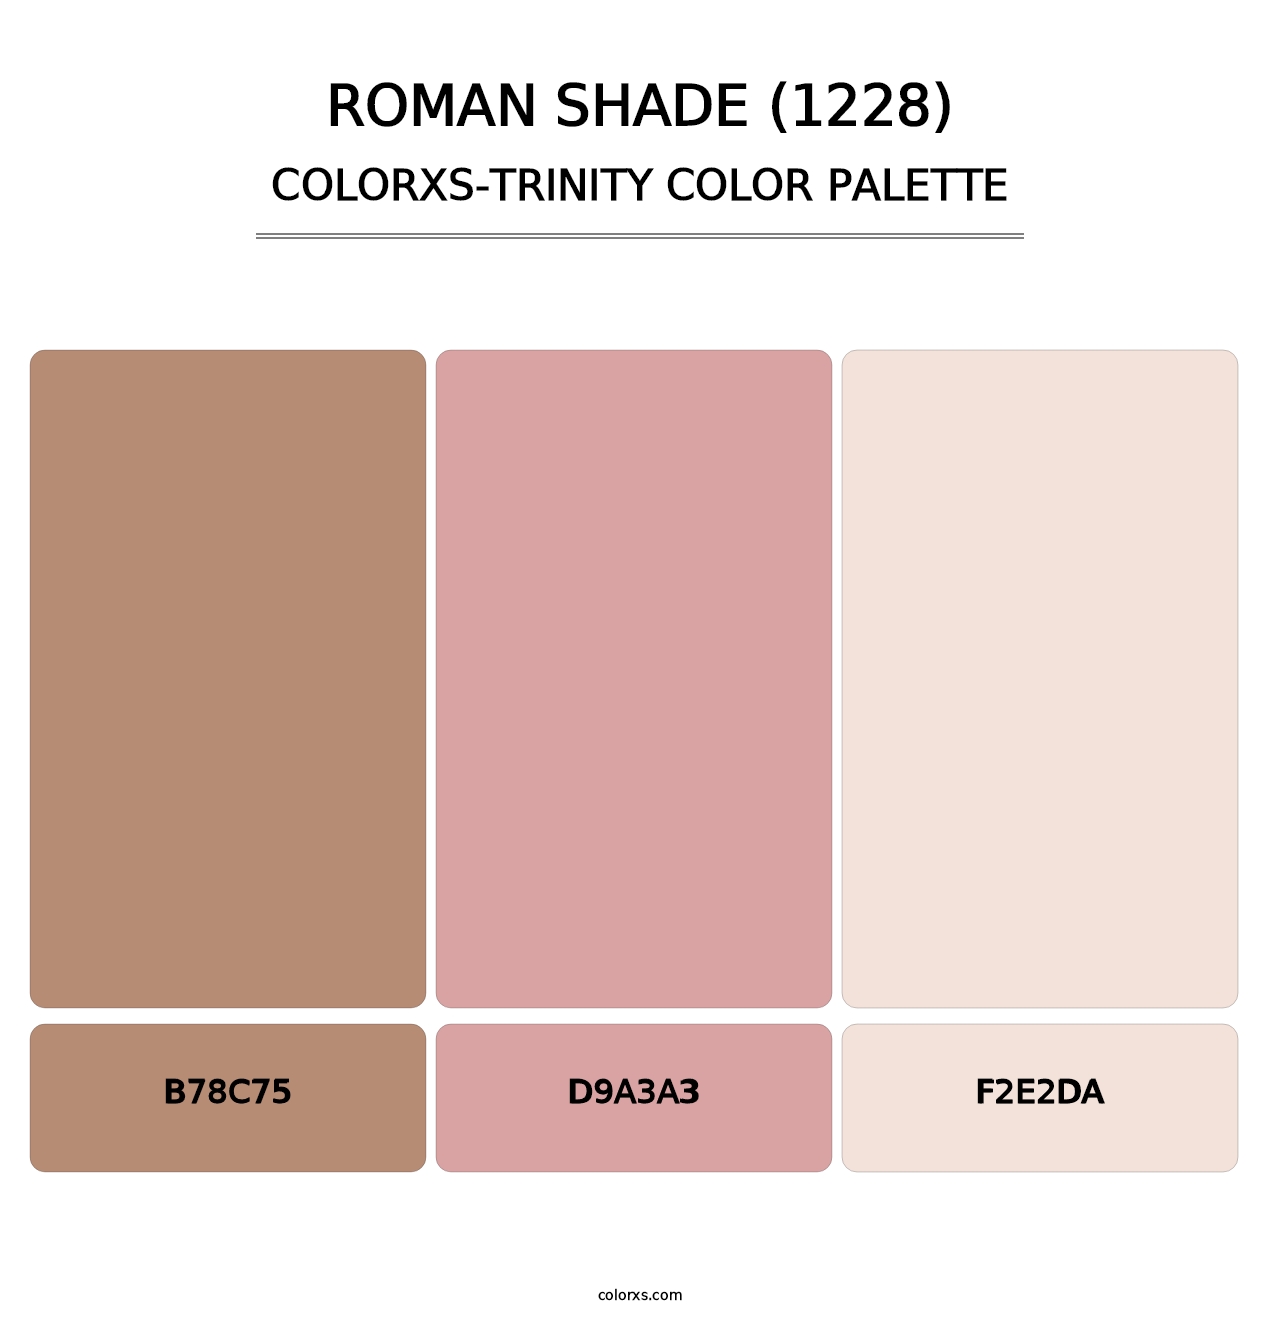 Roman Shade (1228) - Colorxs Trinity Palette